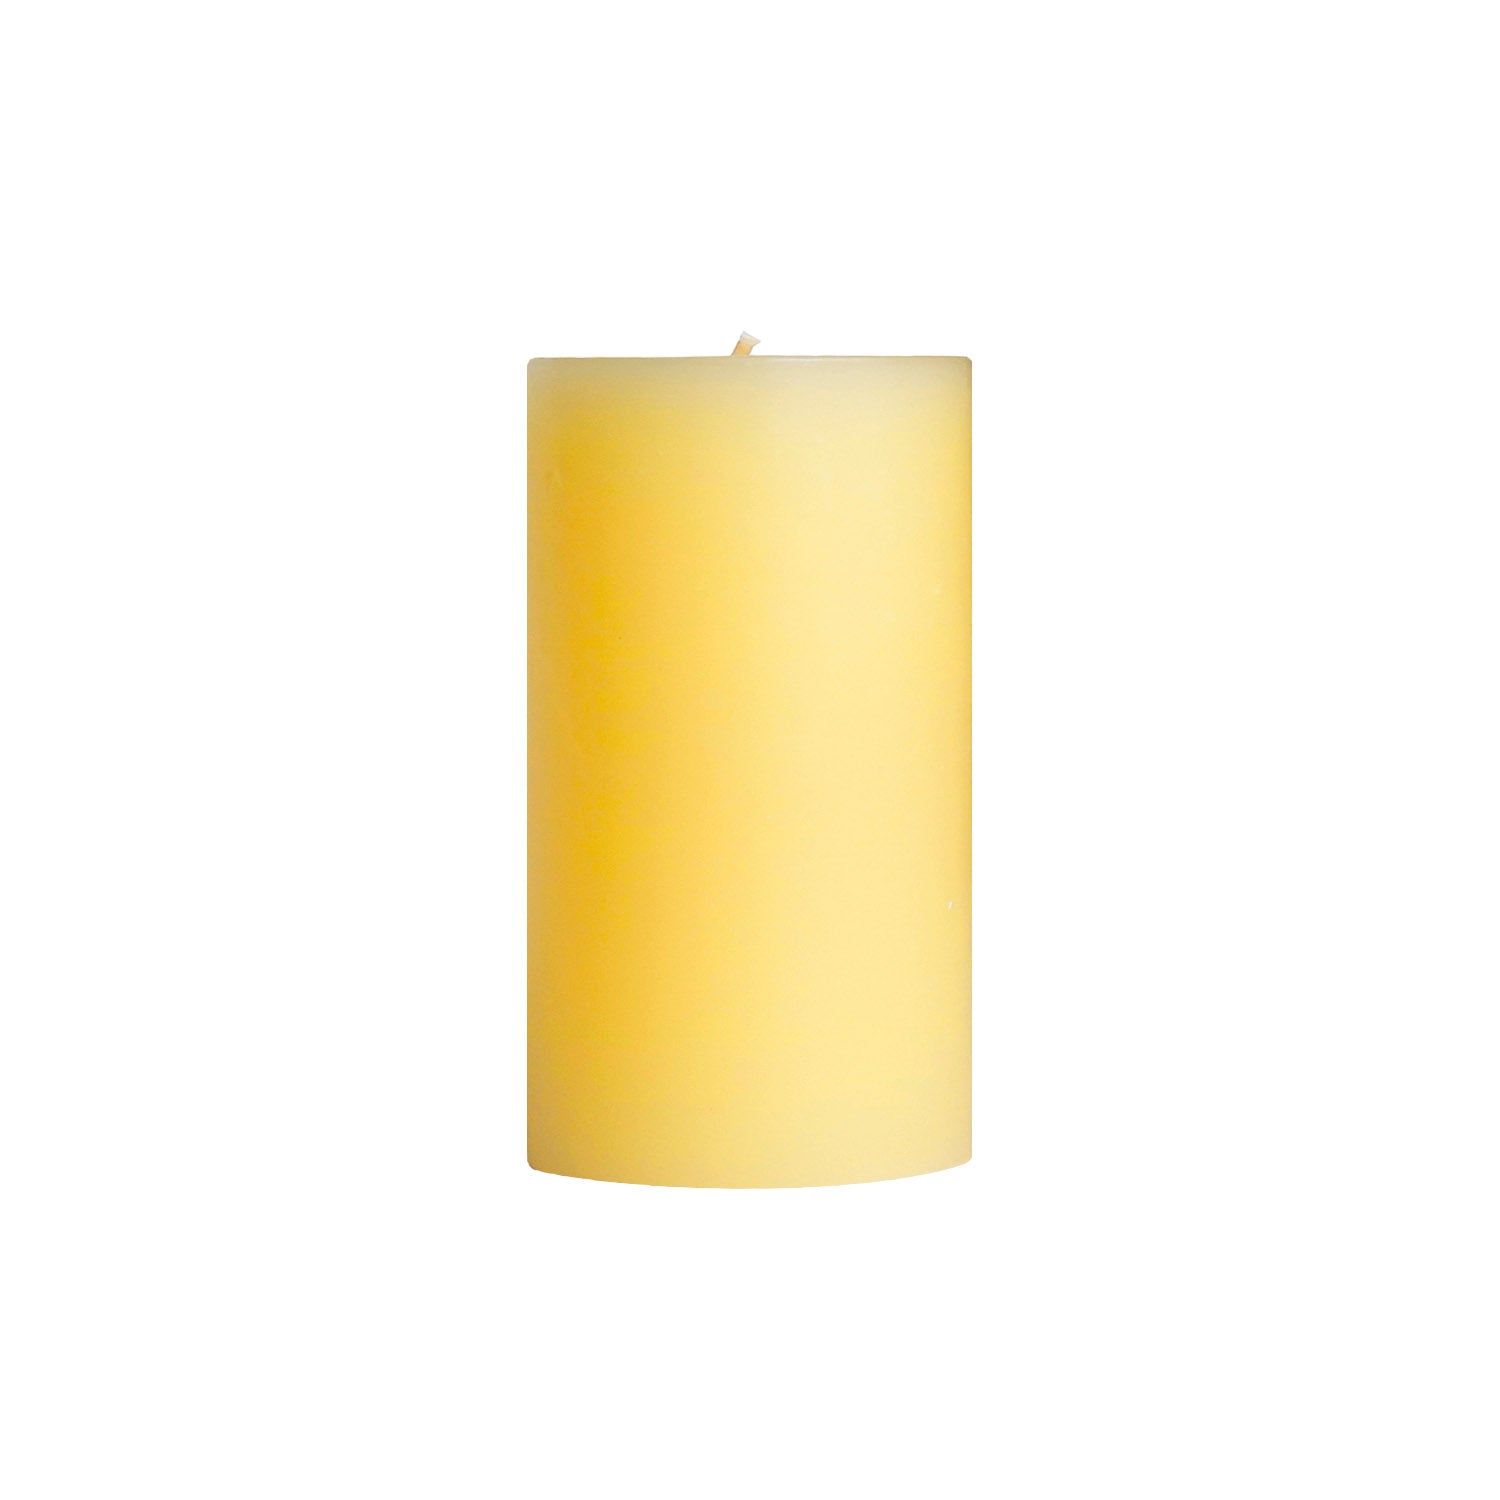 3x6" Rain scented pillar candle